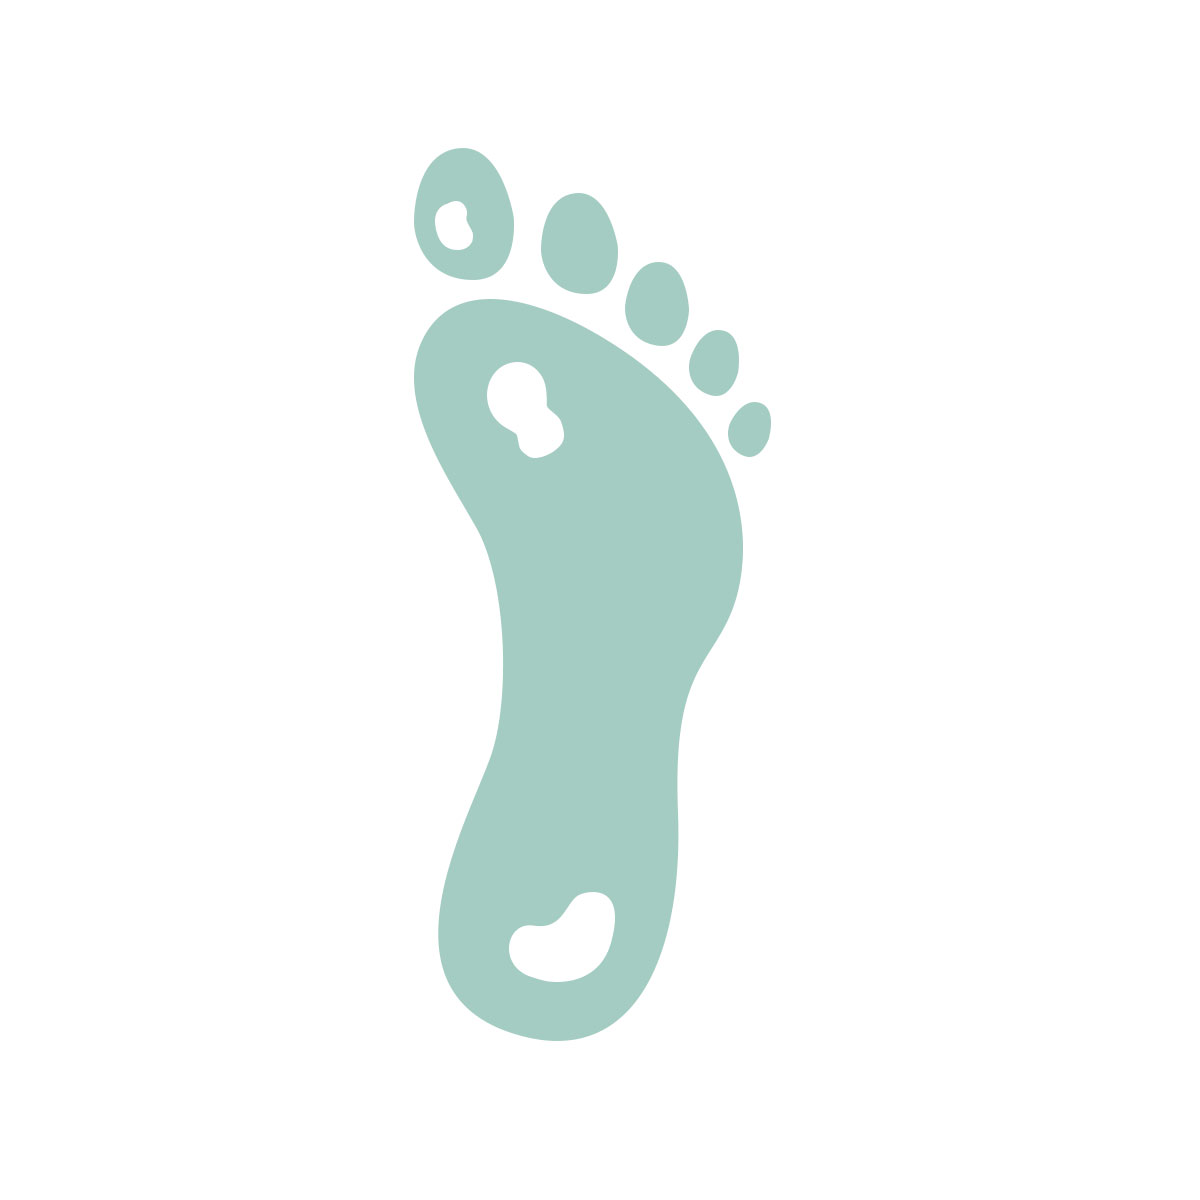 Gawler Balaklava Podiatry Foot Care and Diabetes Feet Solutions